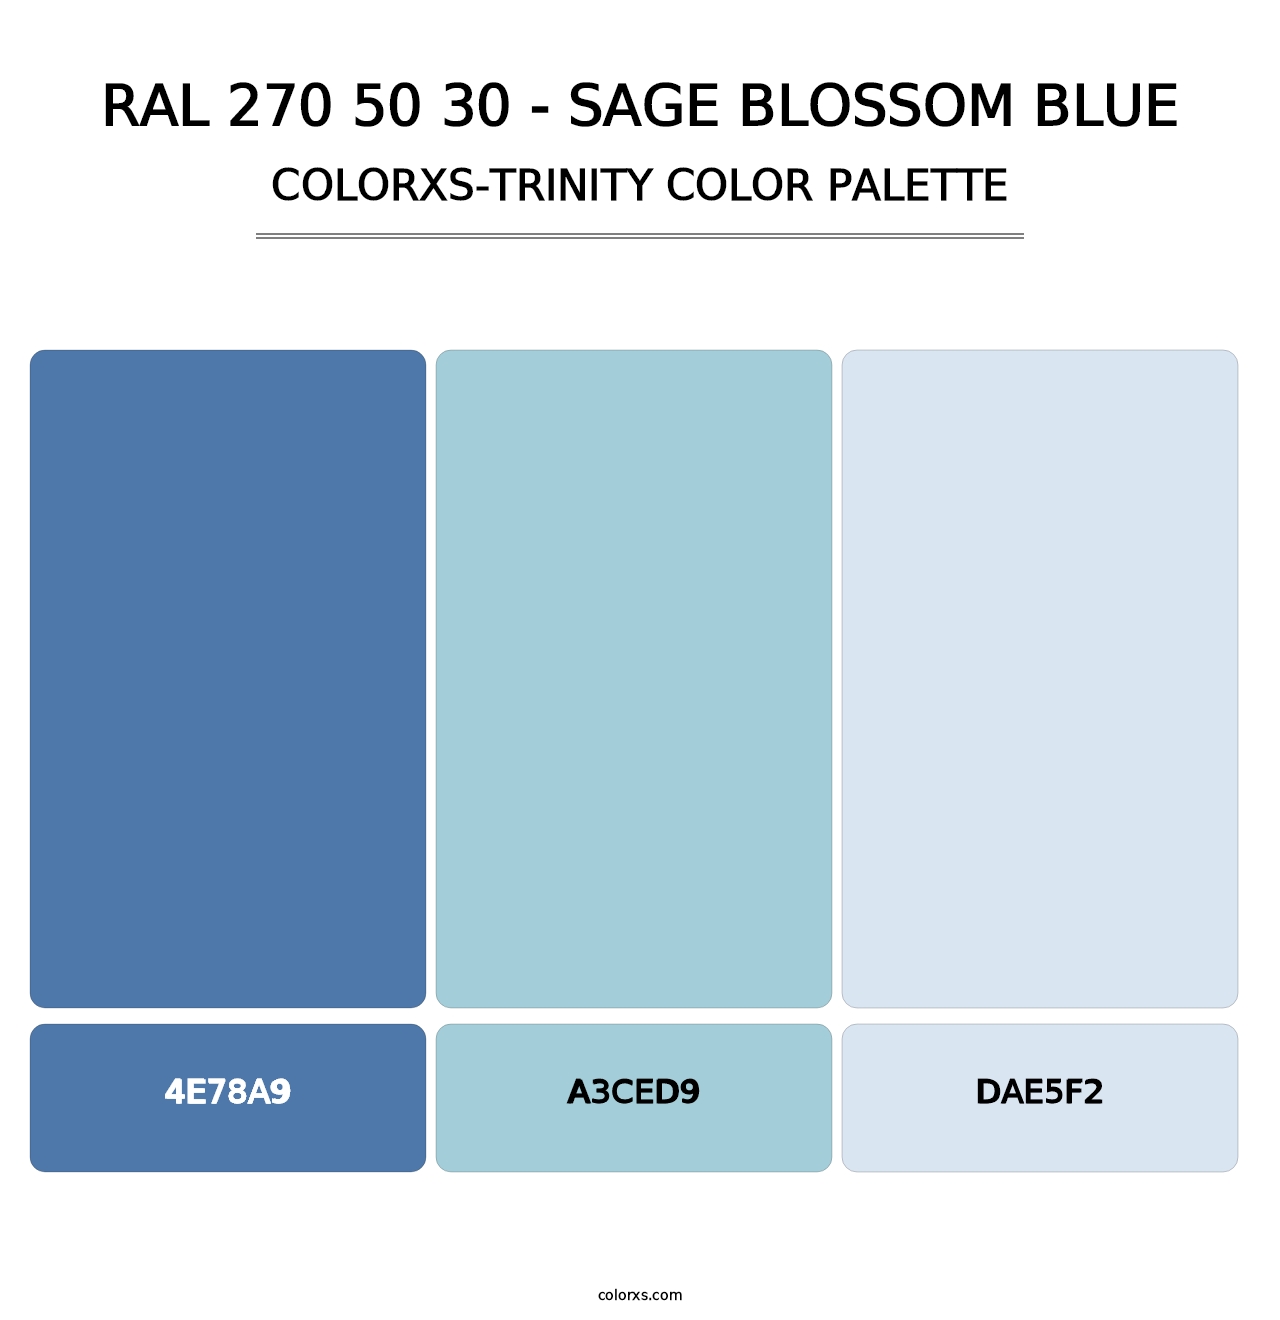 RAL 270 50 30 - Sage Blossom Blue - Colorxs Trinity Palette